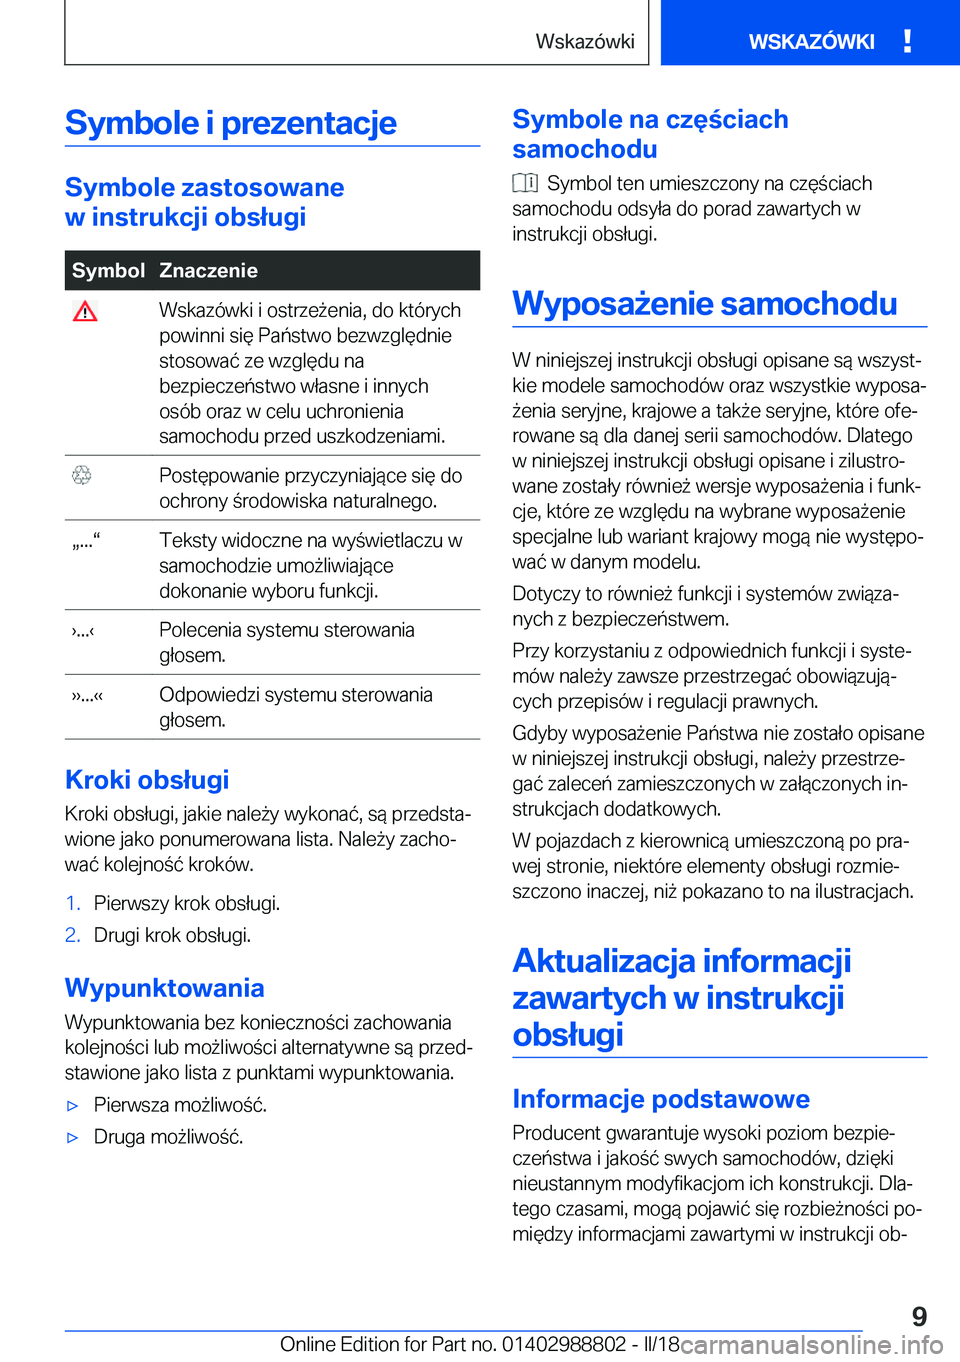 BMW X5 2018  Instrukcja obsługi (in Polish) �S�y�m�b�o�l�e��i��p�r�e�z�e�n�t�a�c�j�e
�S�y�m�b�o�l�e��z�a�s�t�o�s�o�w�a�n�e
�w��i�n�s�t�r�u�k�c�j�i��o�b�s�ł�u�g�i
�S�y�m�b�o�l�Z�n�a�c�z�e�n�i�e� �W�s�k�a�z�